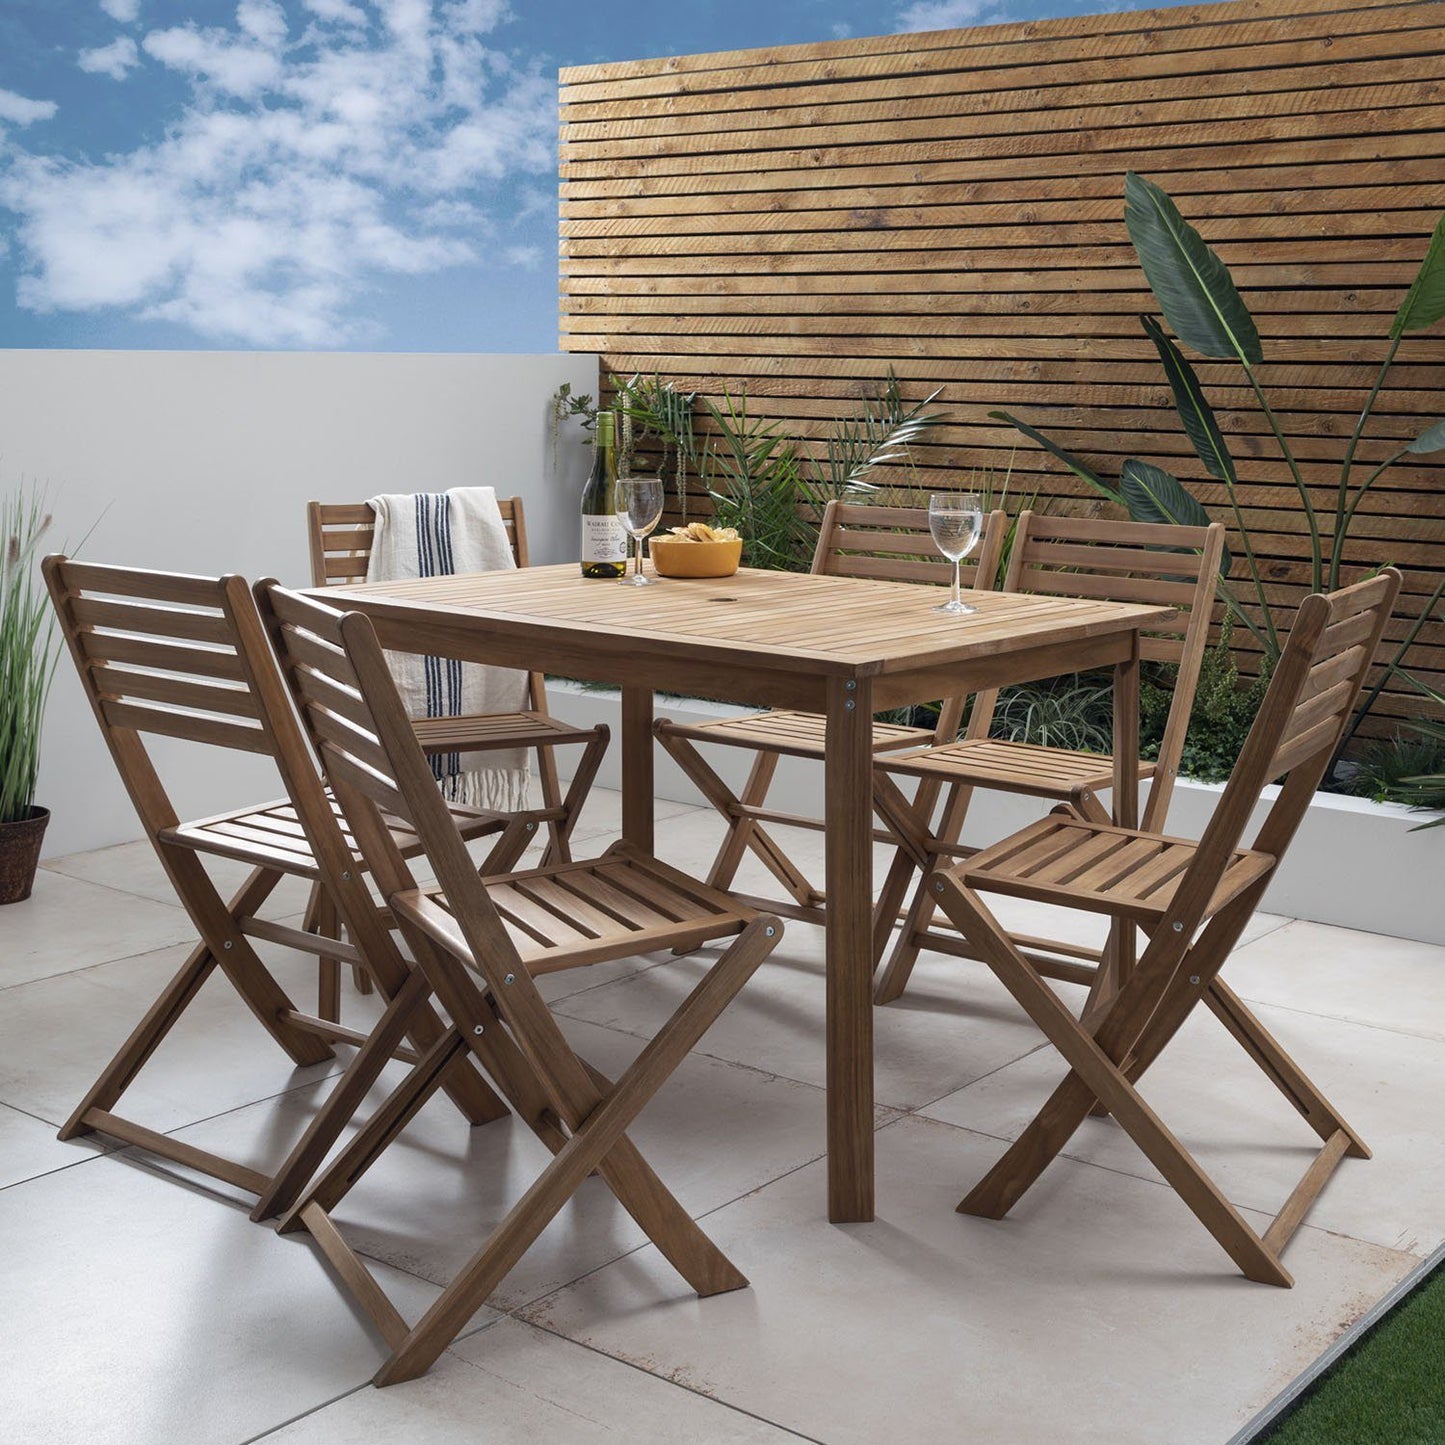 Ackley wooden garden furniture – 6 seater outdoor dining set with cream premium parasol